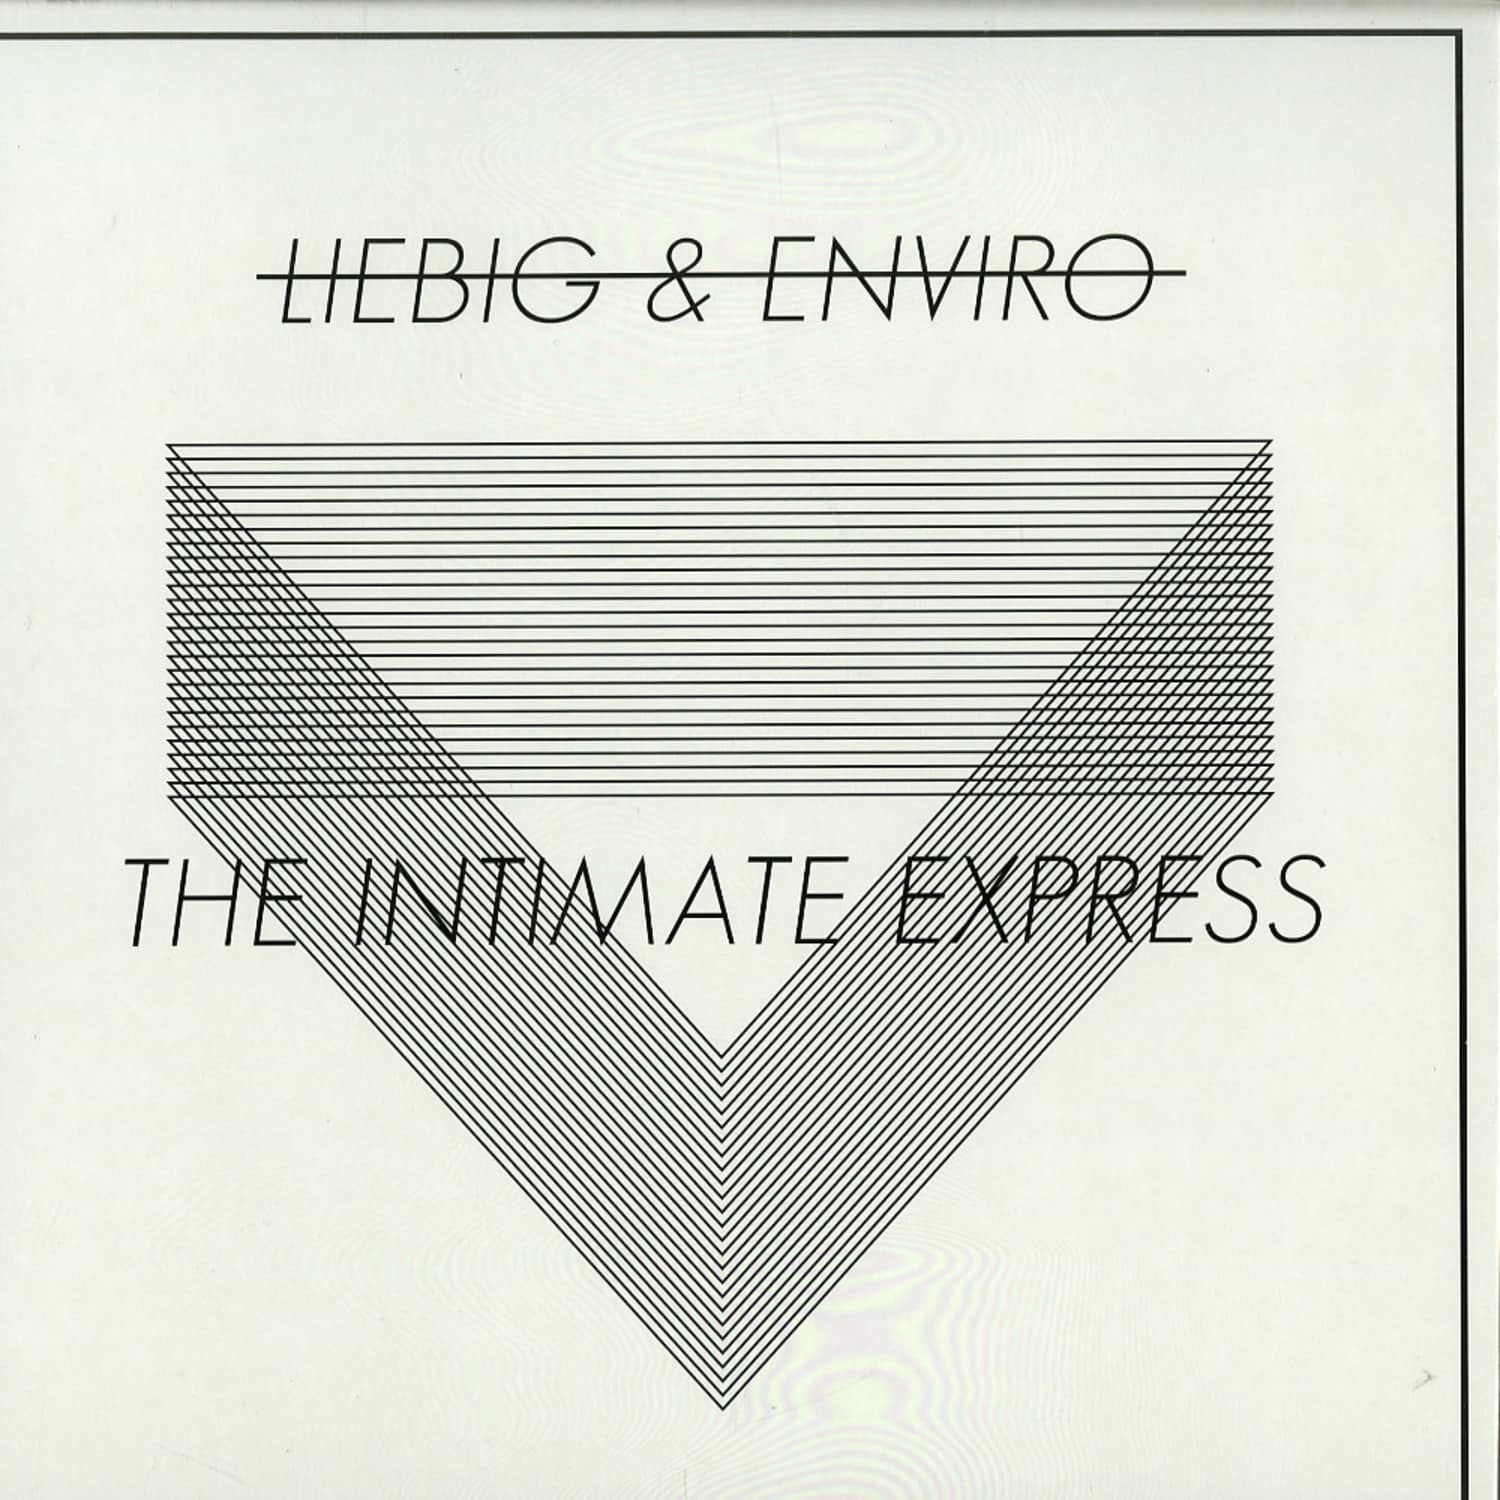 Liebig & Enviro - THE INTIMATE EXPRESS 